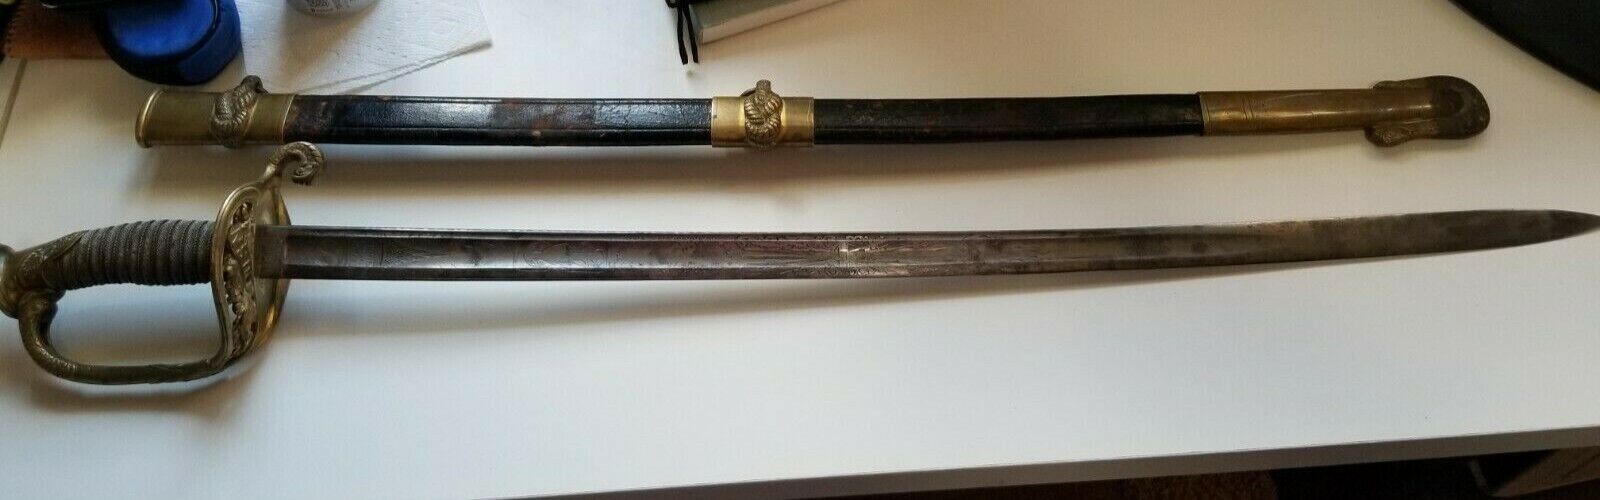 Antique U.S. 1852 Naval Officer's Sword Made by W. H. Horstmann Civil War Sword 